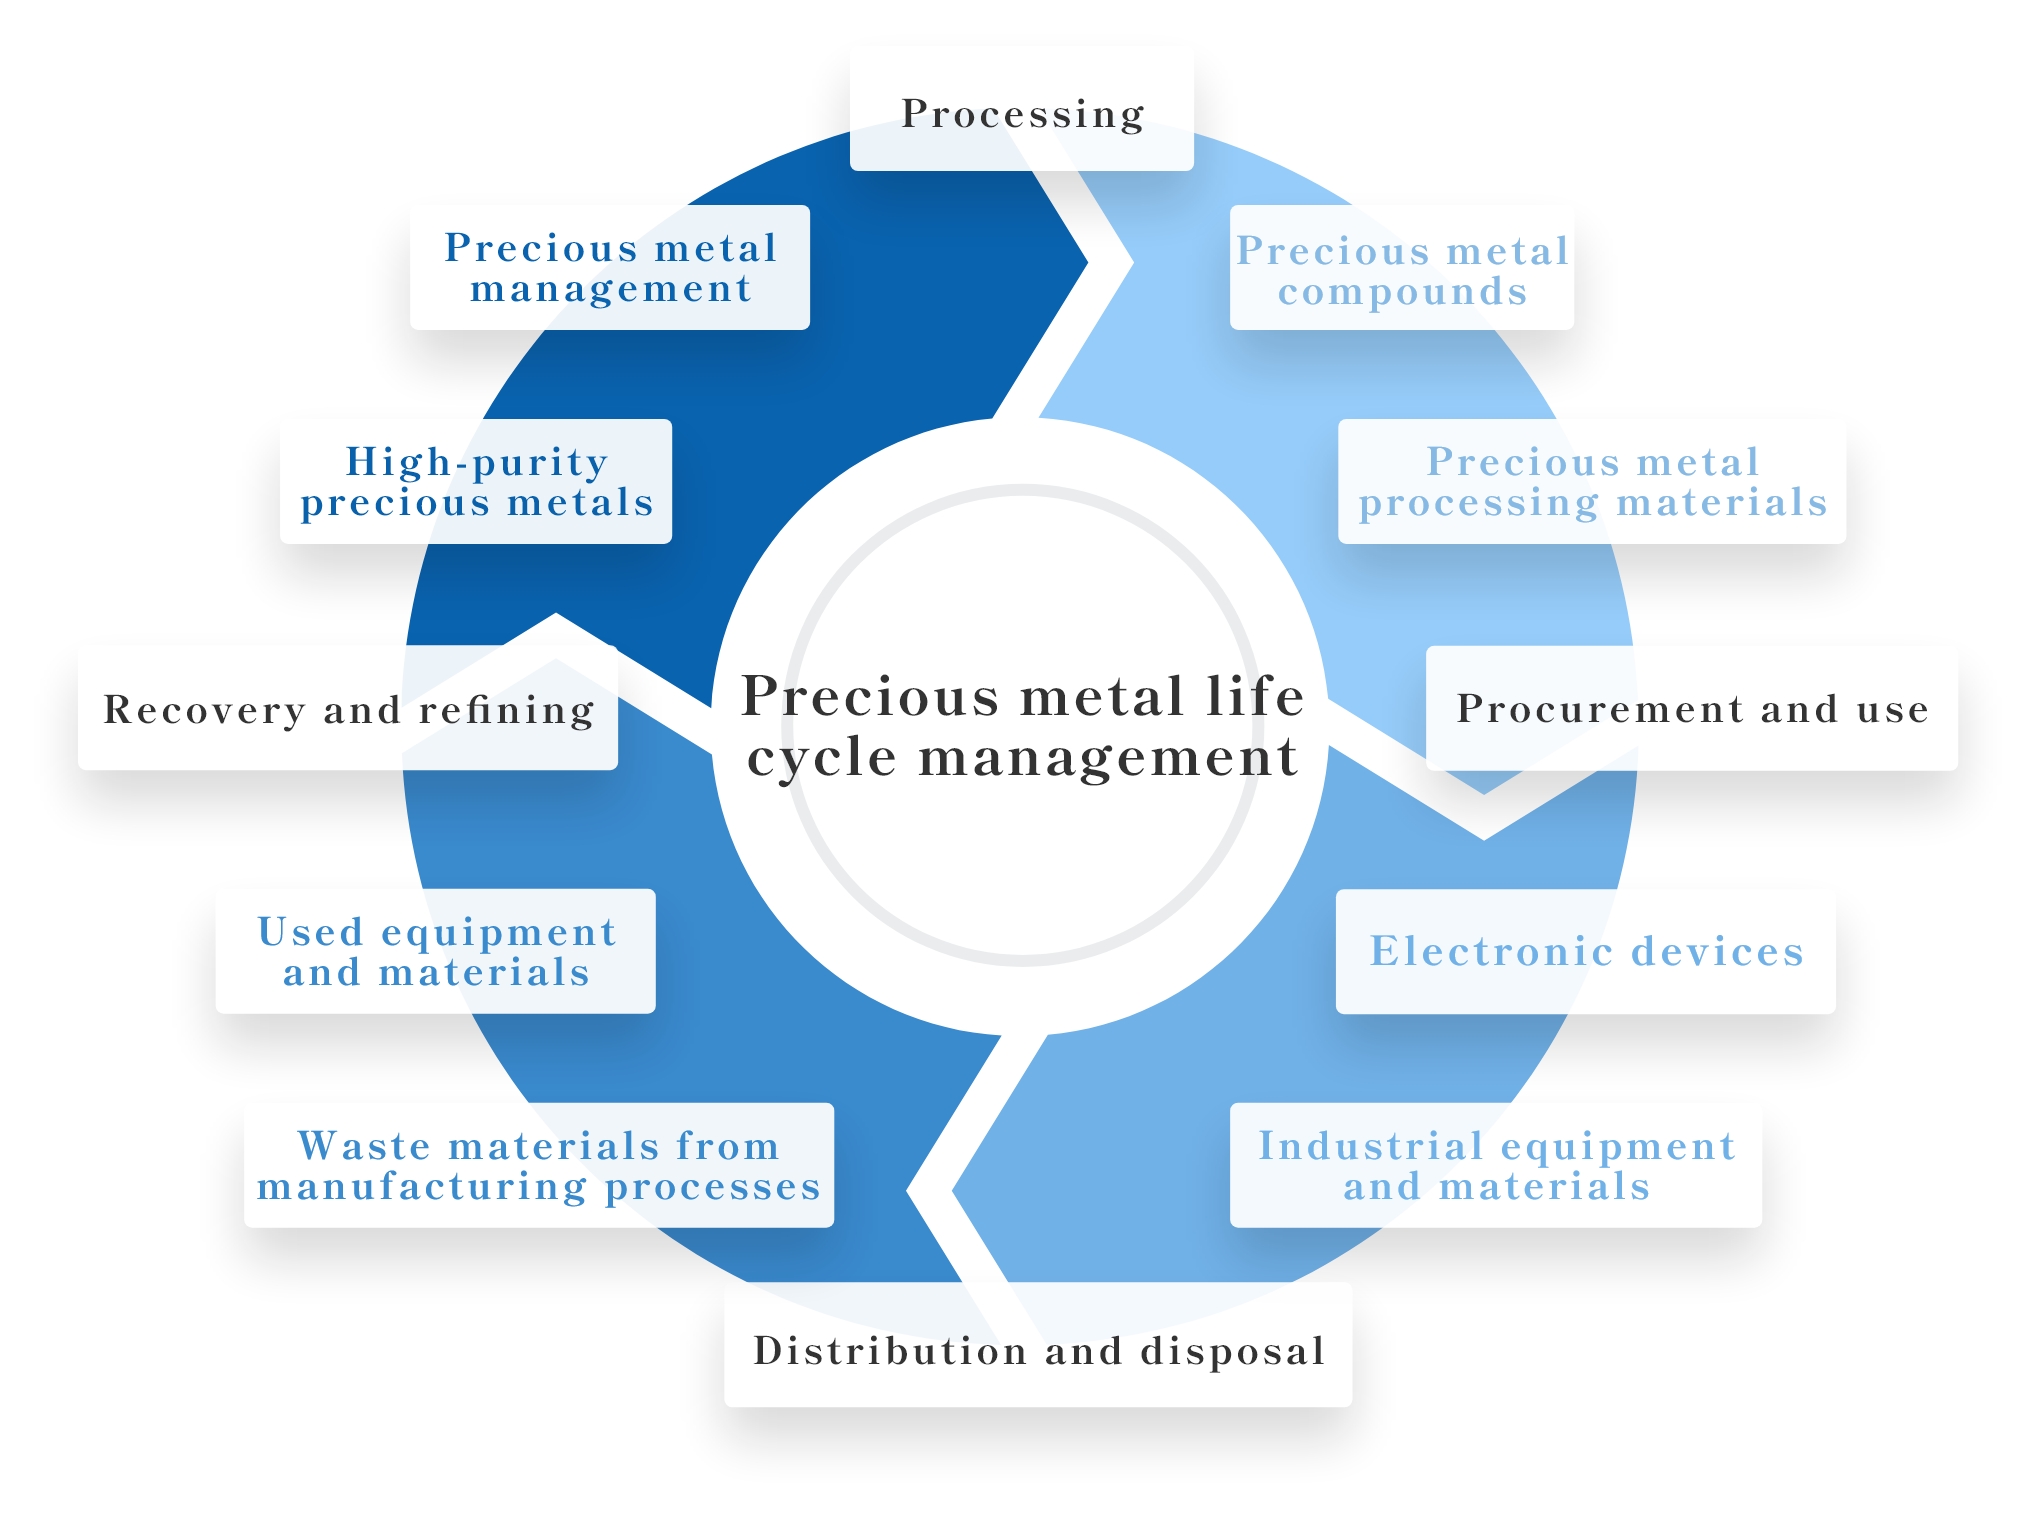 Precious metal life cycle management